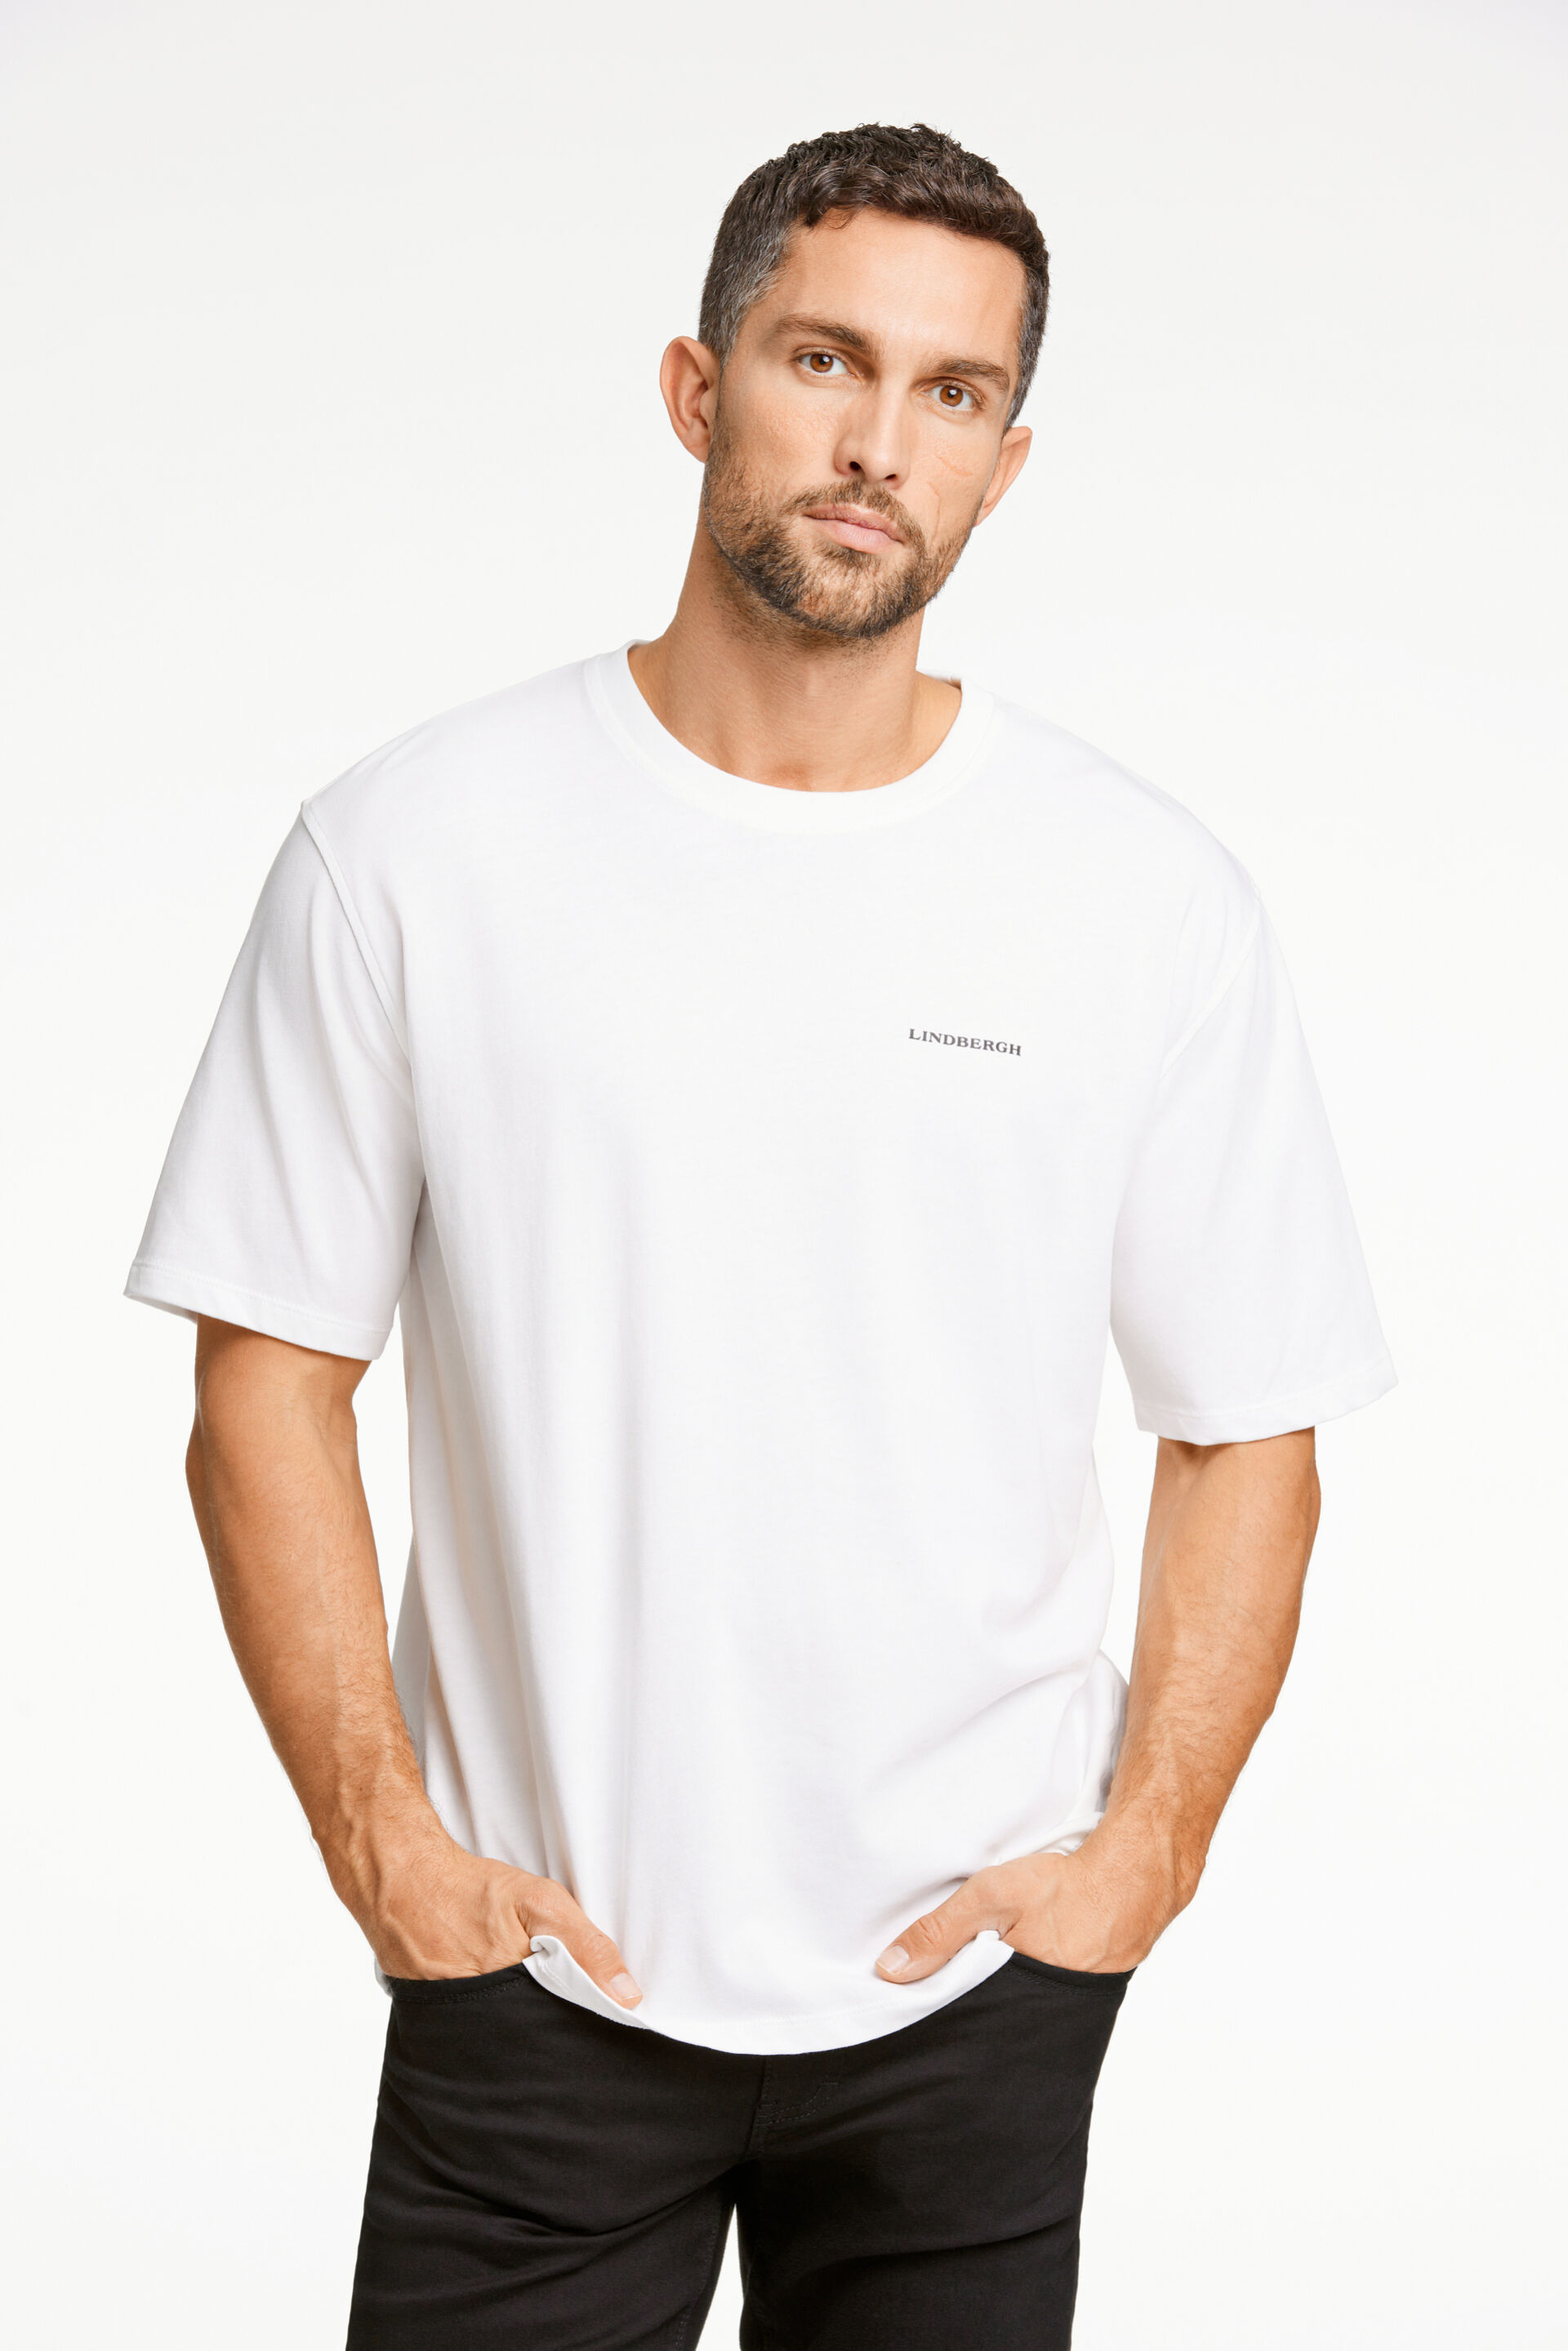 Lindbergh  T-shirt Hvid 30-425019